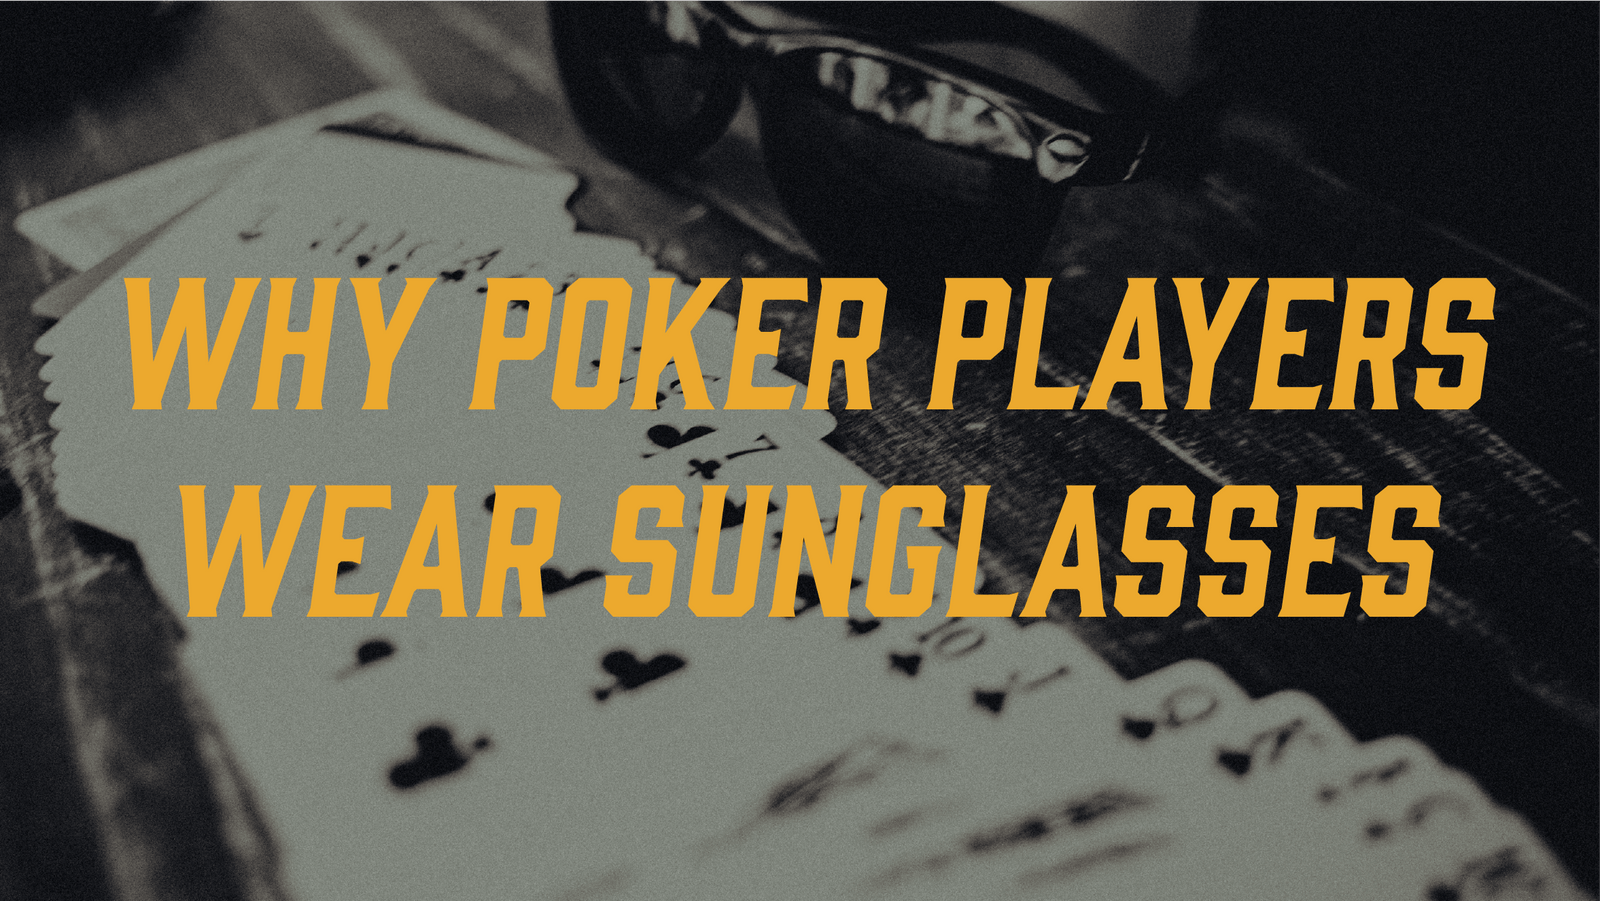 Why do Poker Players Wear Sunglasses/Visors/Headphones?